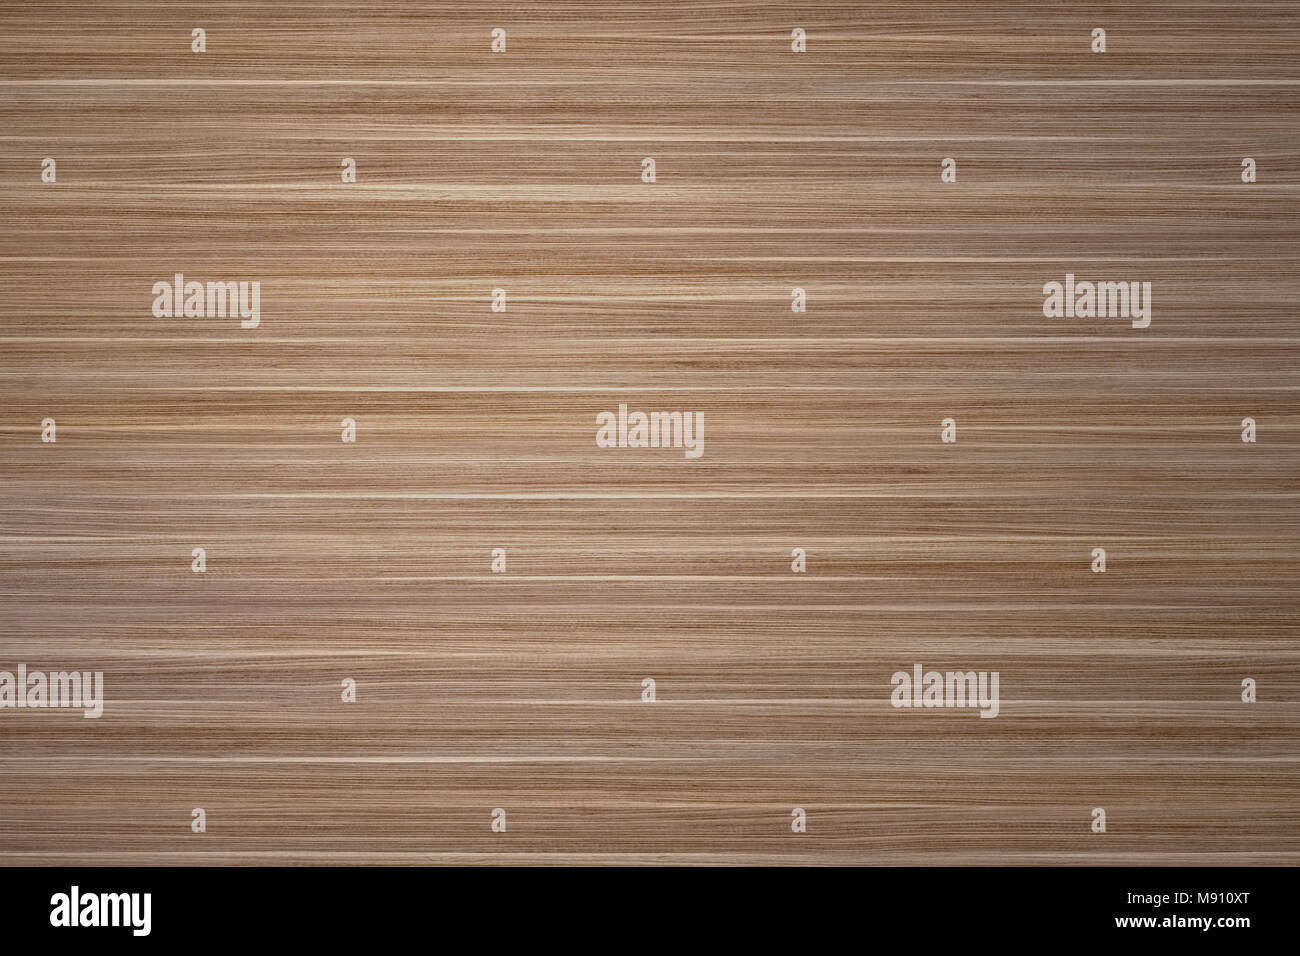 Grunge wood pattern texture background, wooden planks Stock Photo